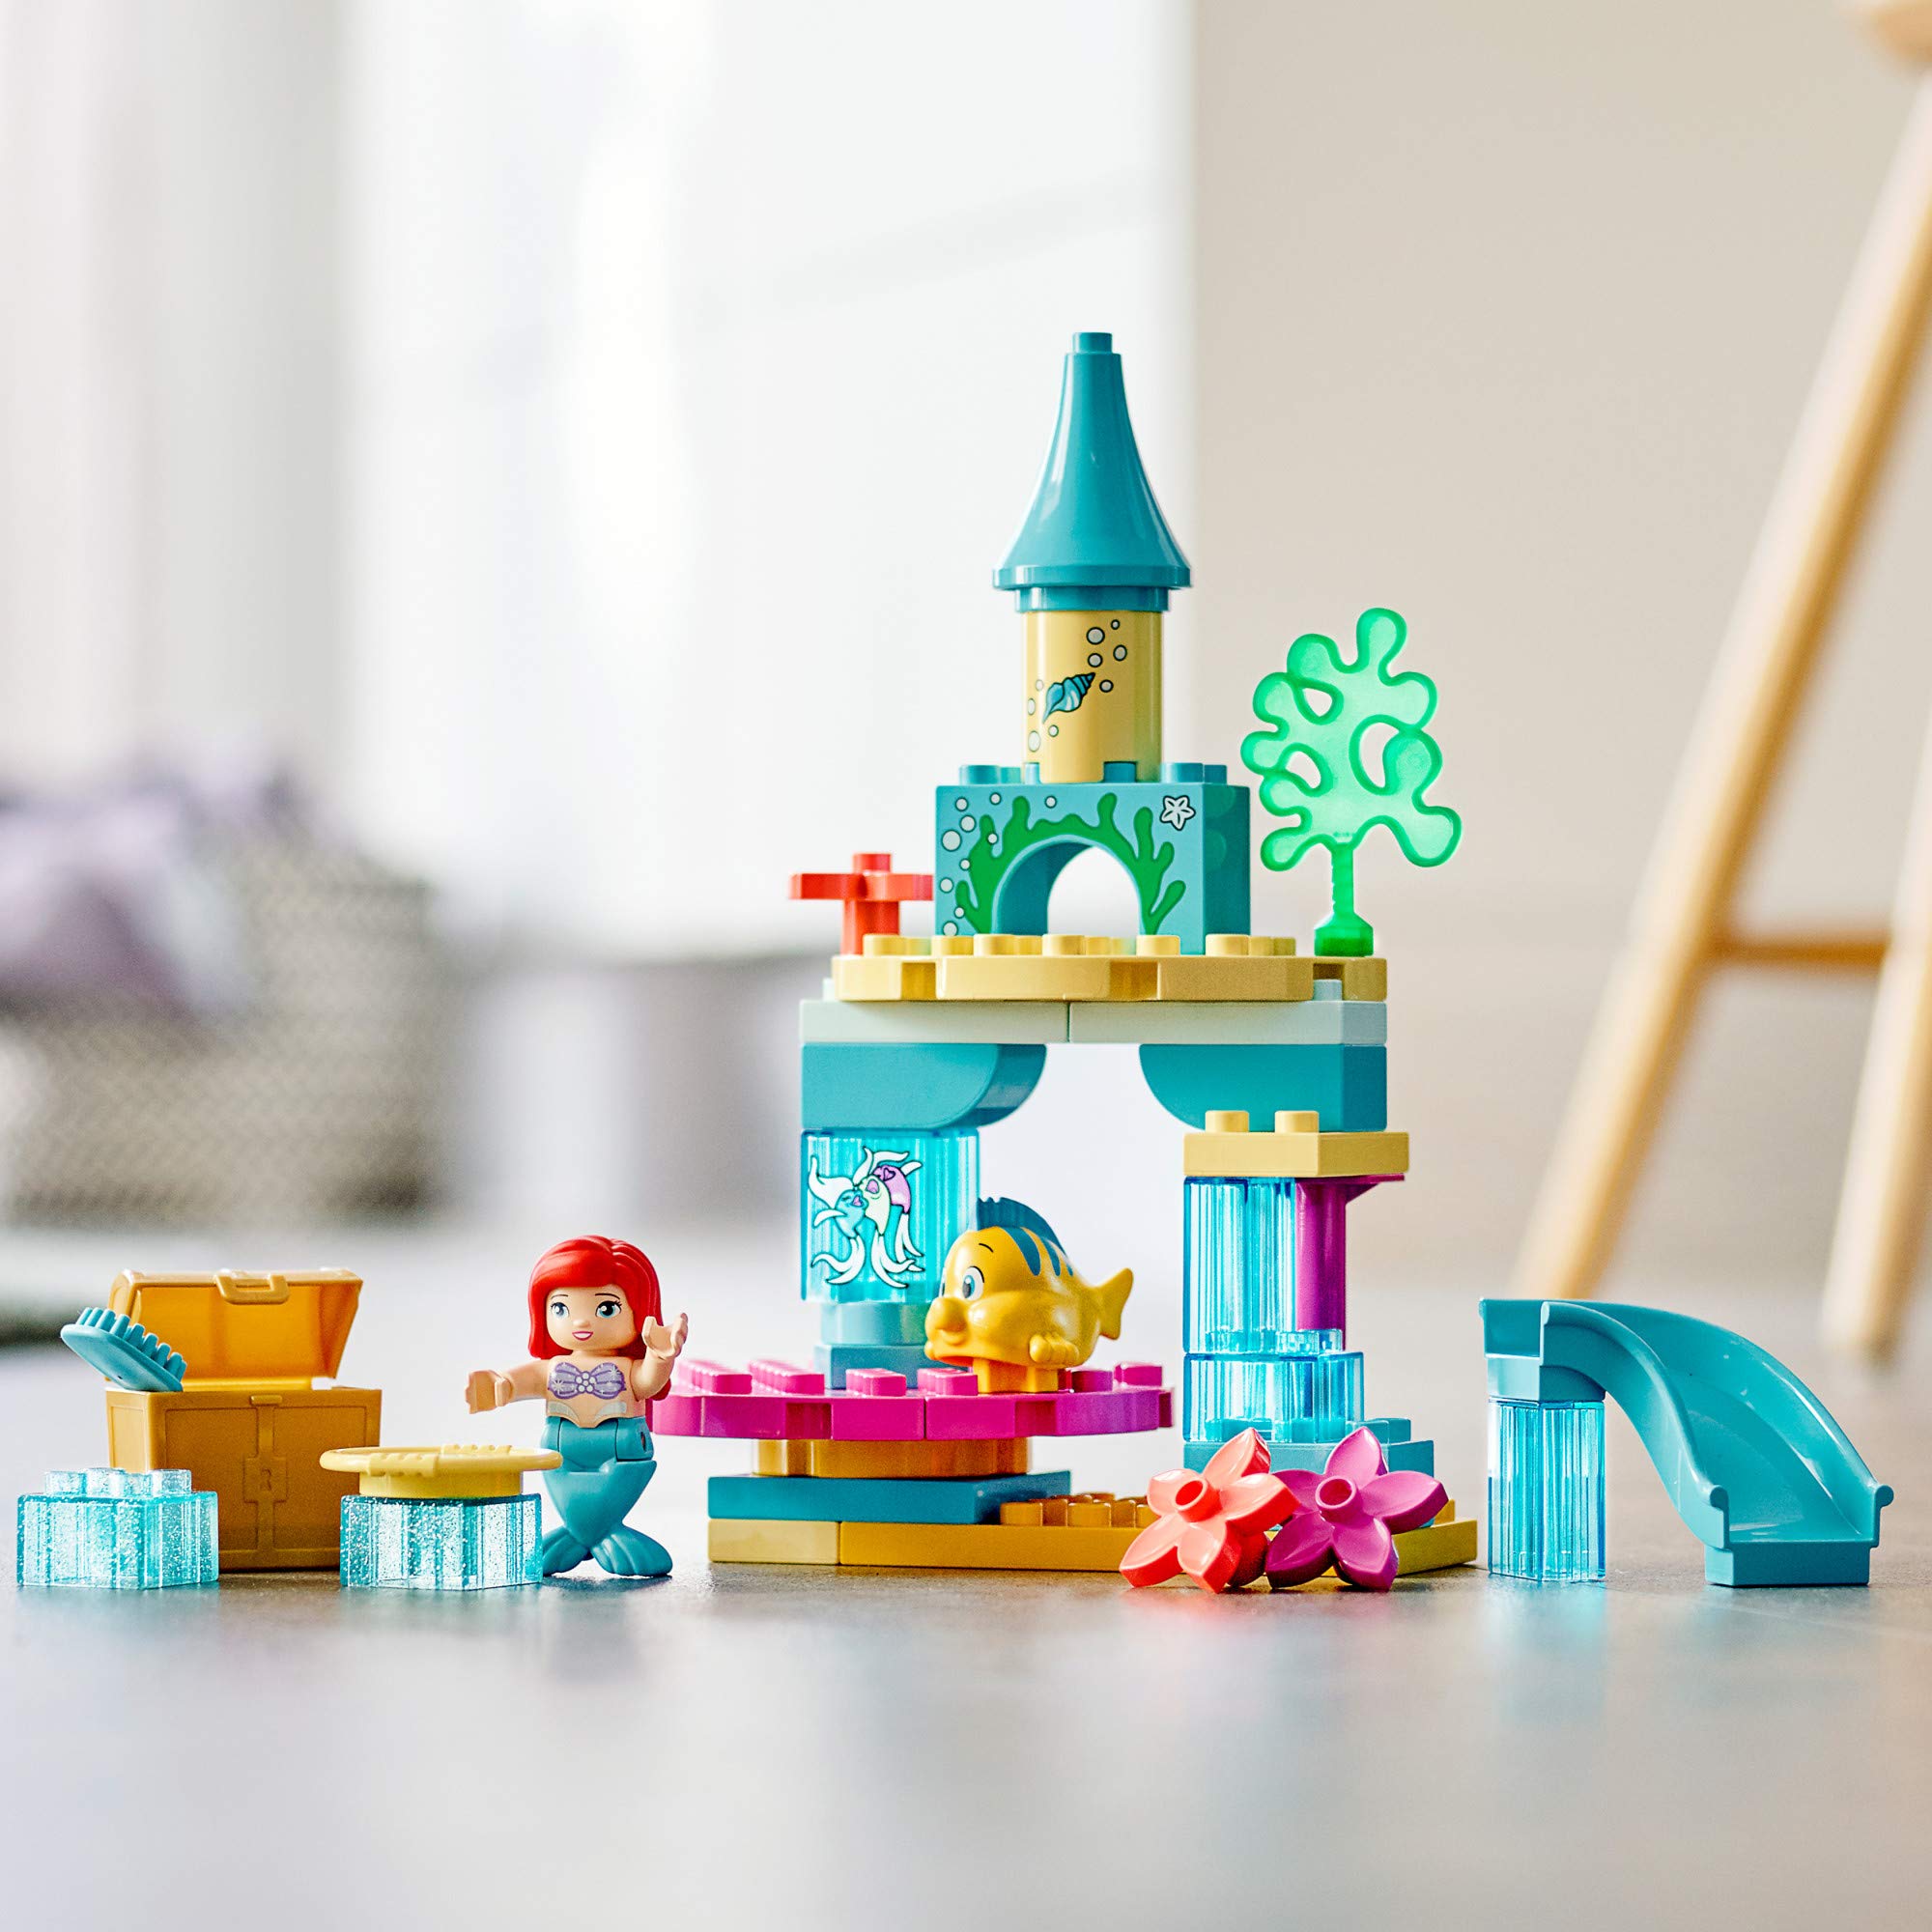 LEGO DUPLO Disney Ariel's Undersea Castle 10922 Imaginative Building Toy for Kids; Ariel and Flounder’s Princess Castle Playset Under The Sea (35 Pieces)